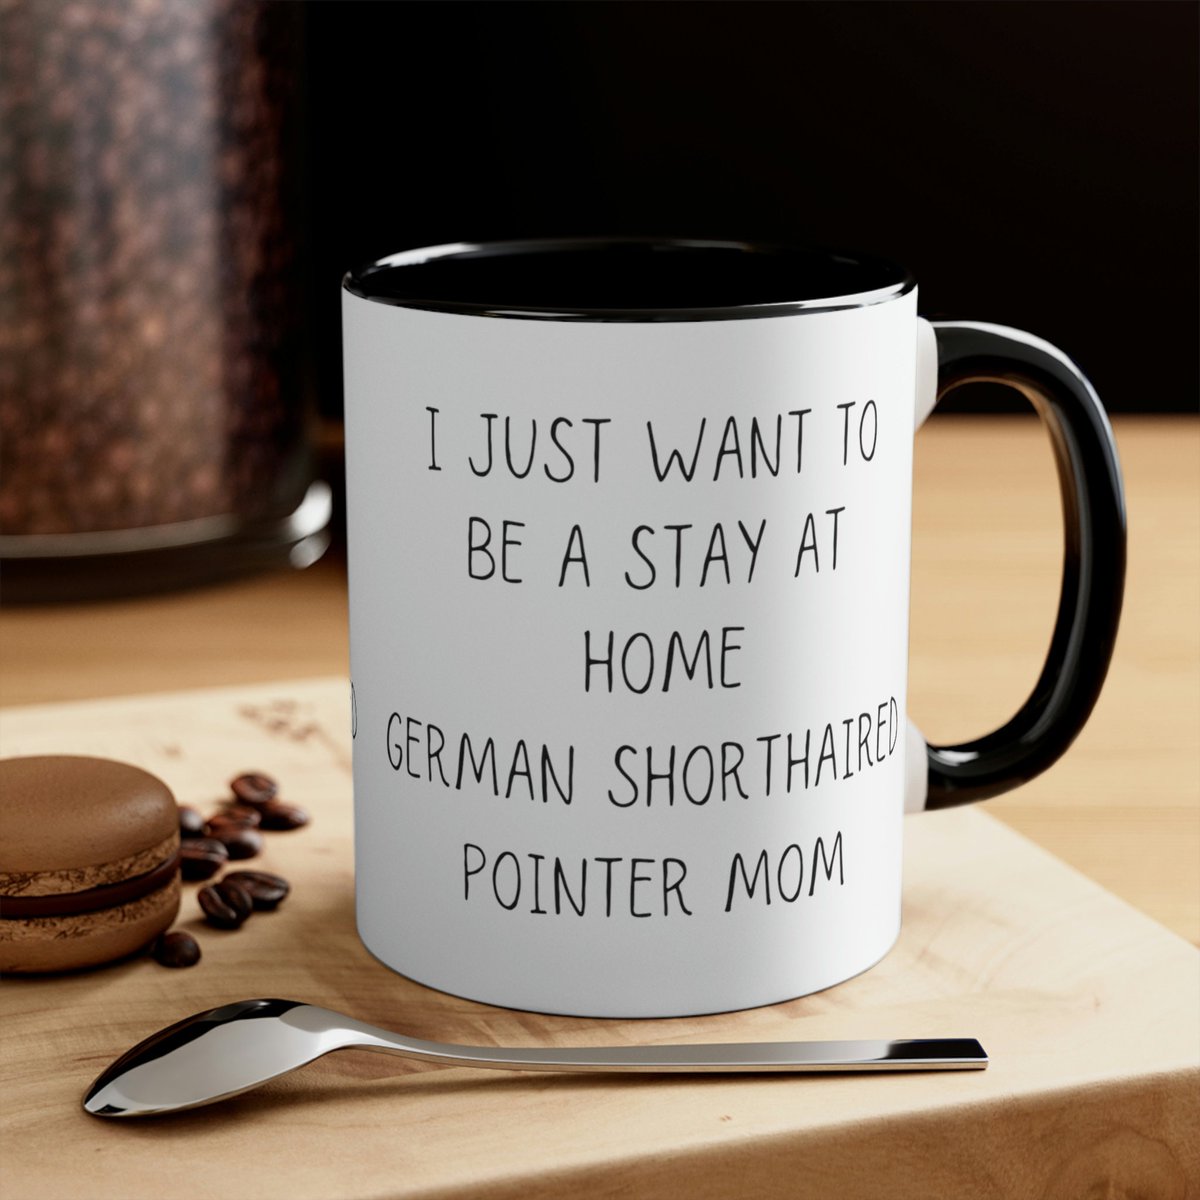 Funny German Shorthaired Pointer Mom Gift Mug #germanshorthaired #pointer #shorthairedpointer #germanpointer #germanpointerdog #germanpointergift #germanpointermom #germanpointermug CLICK HERE TO BUY NOW: etsy.me/3KXKEZk